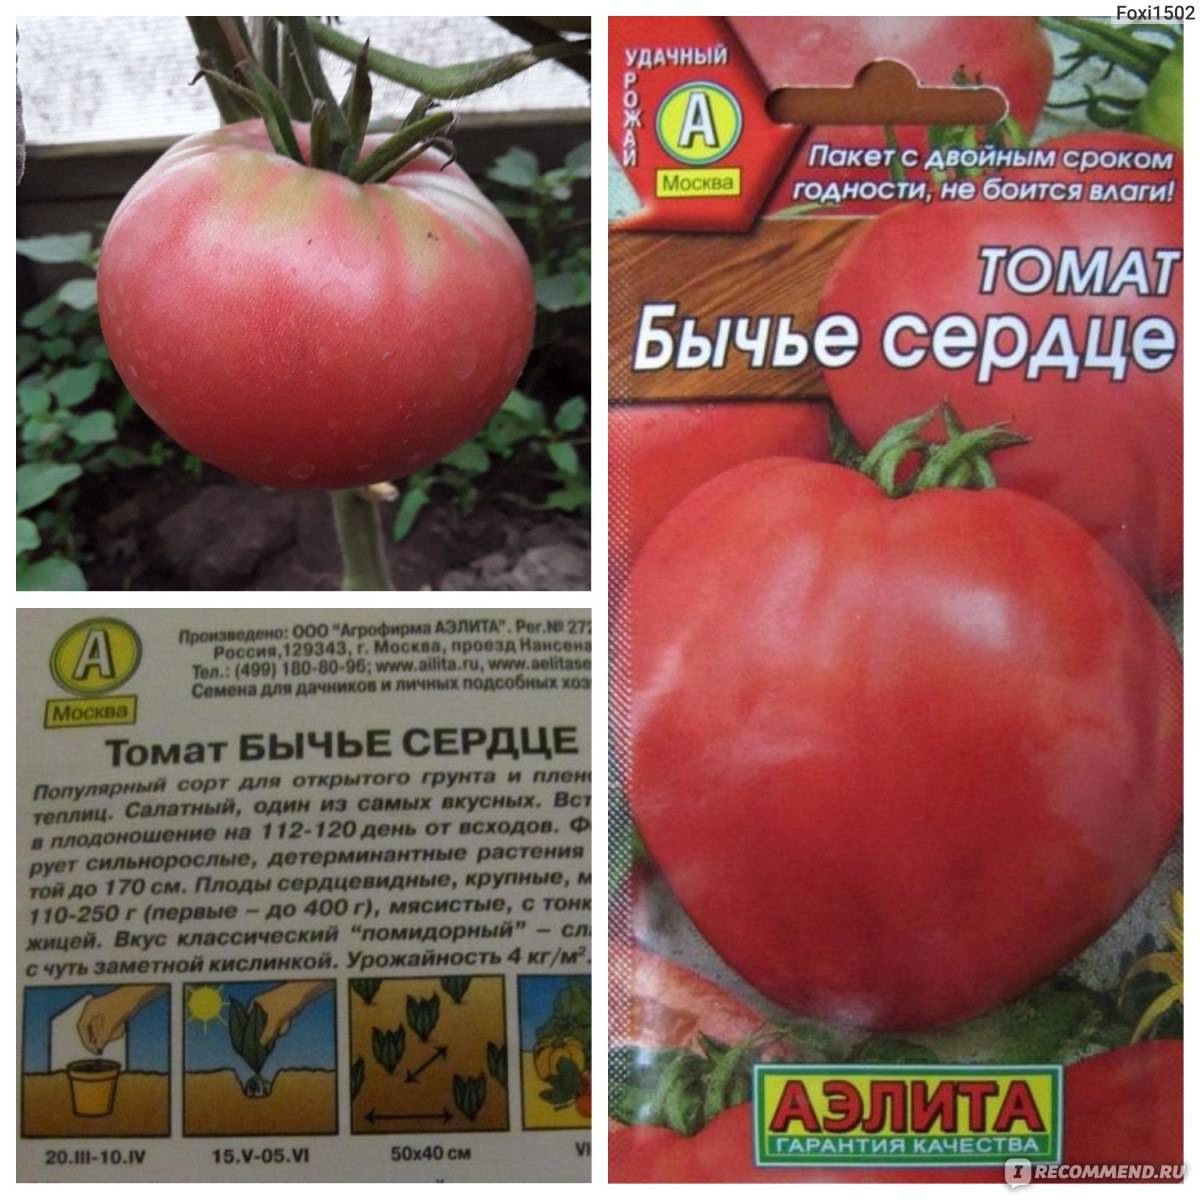 Описание томата девичьи сердечки и выращивание в тепличных условиях